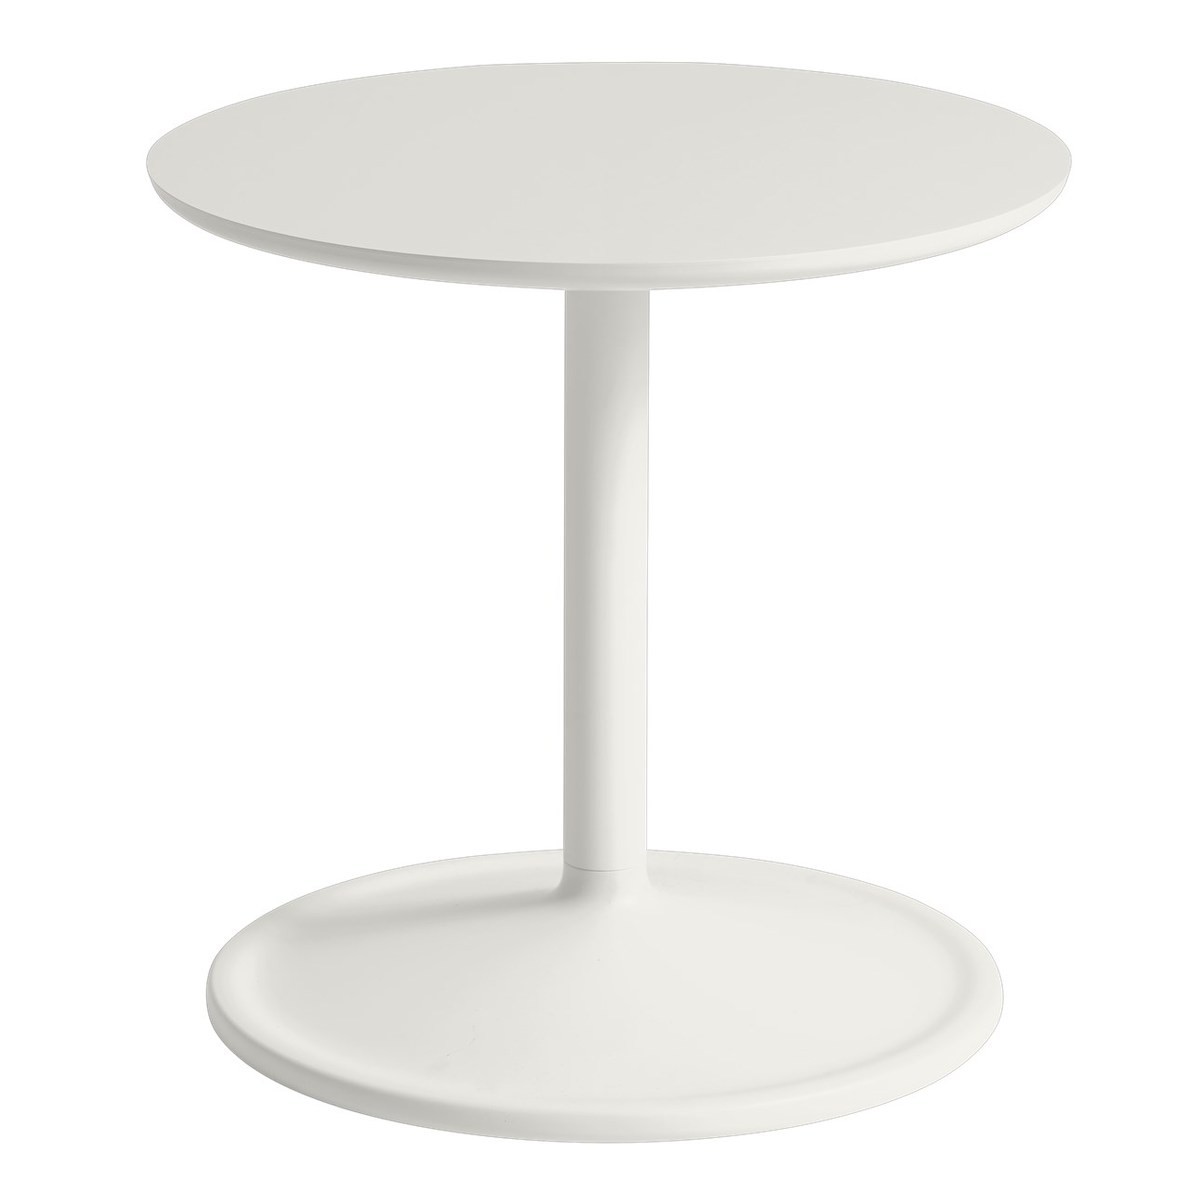 Off white - Ø41cm, H40cm - Soft side table